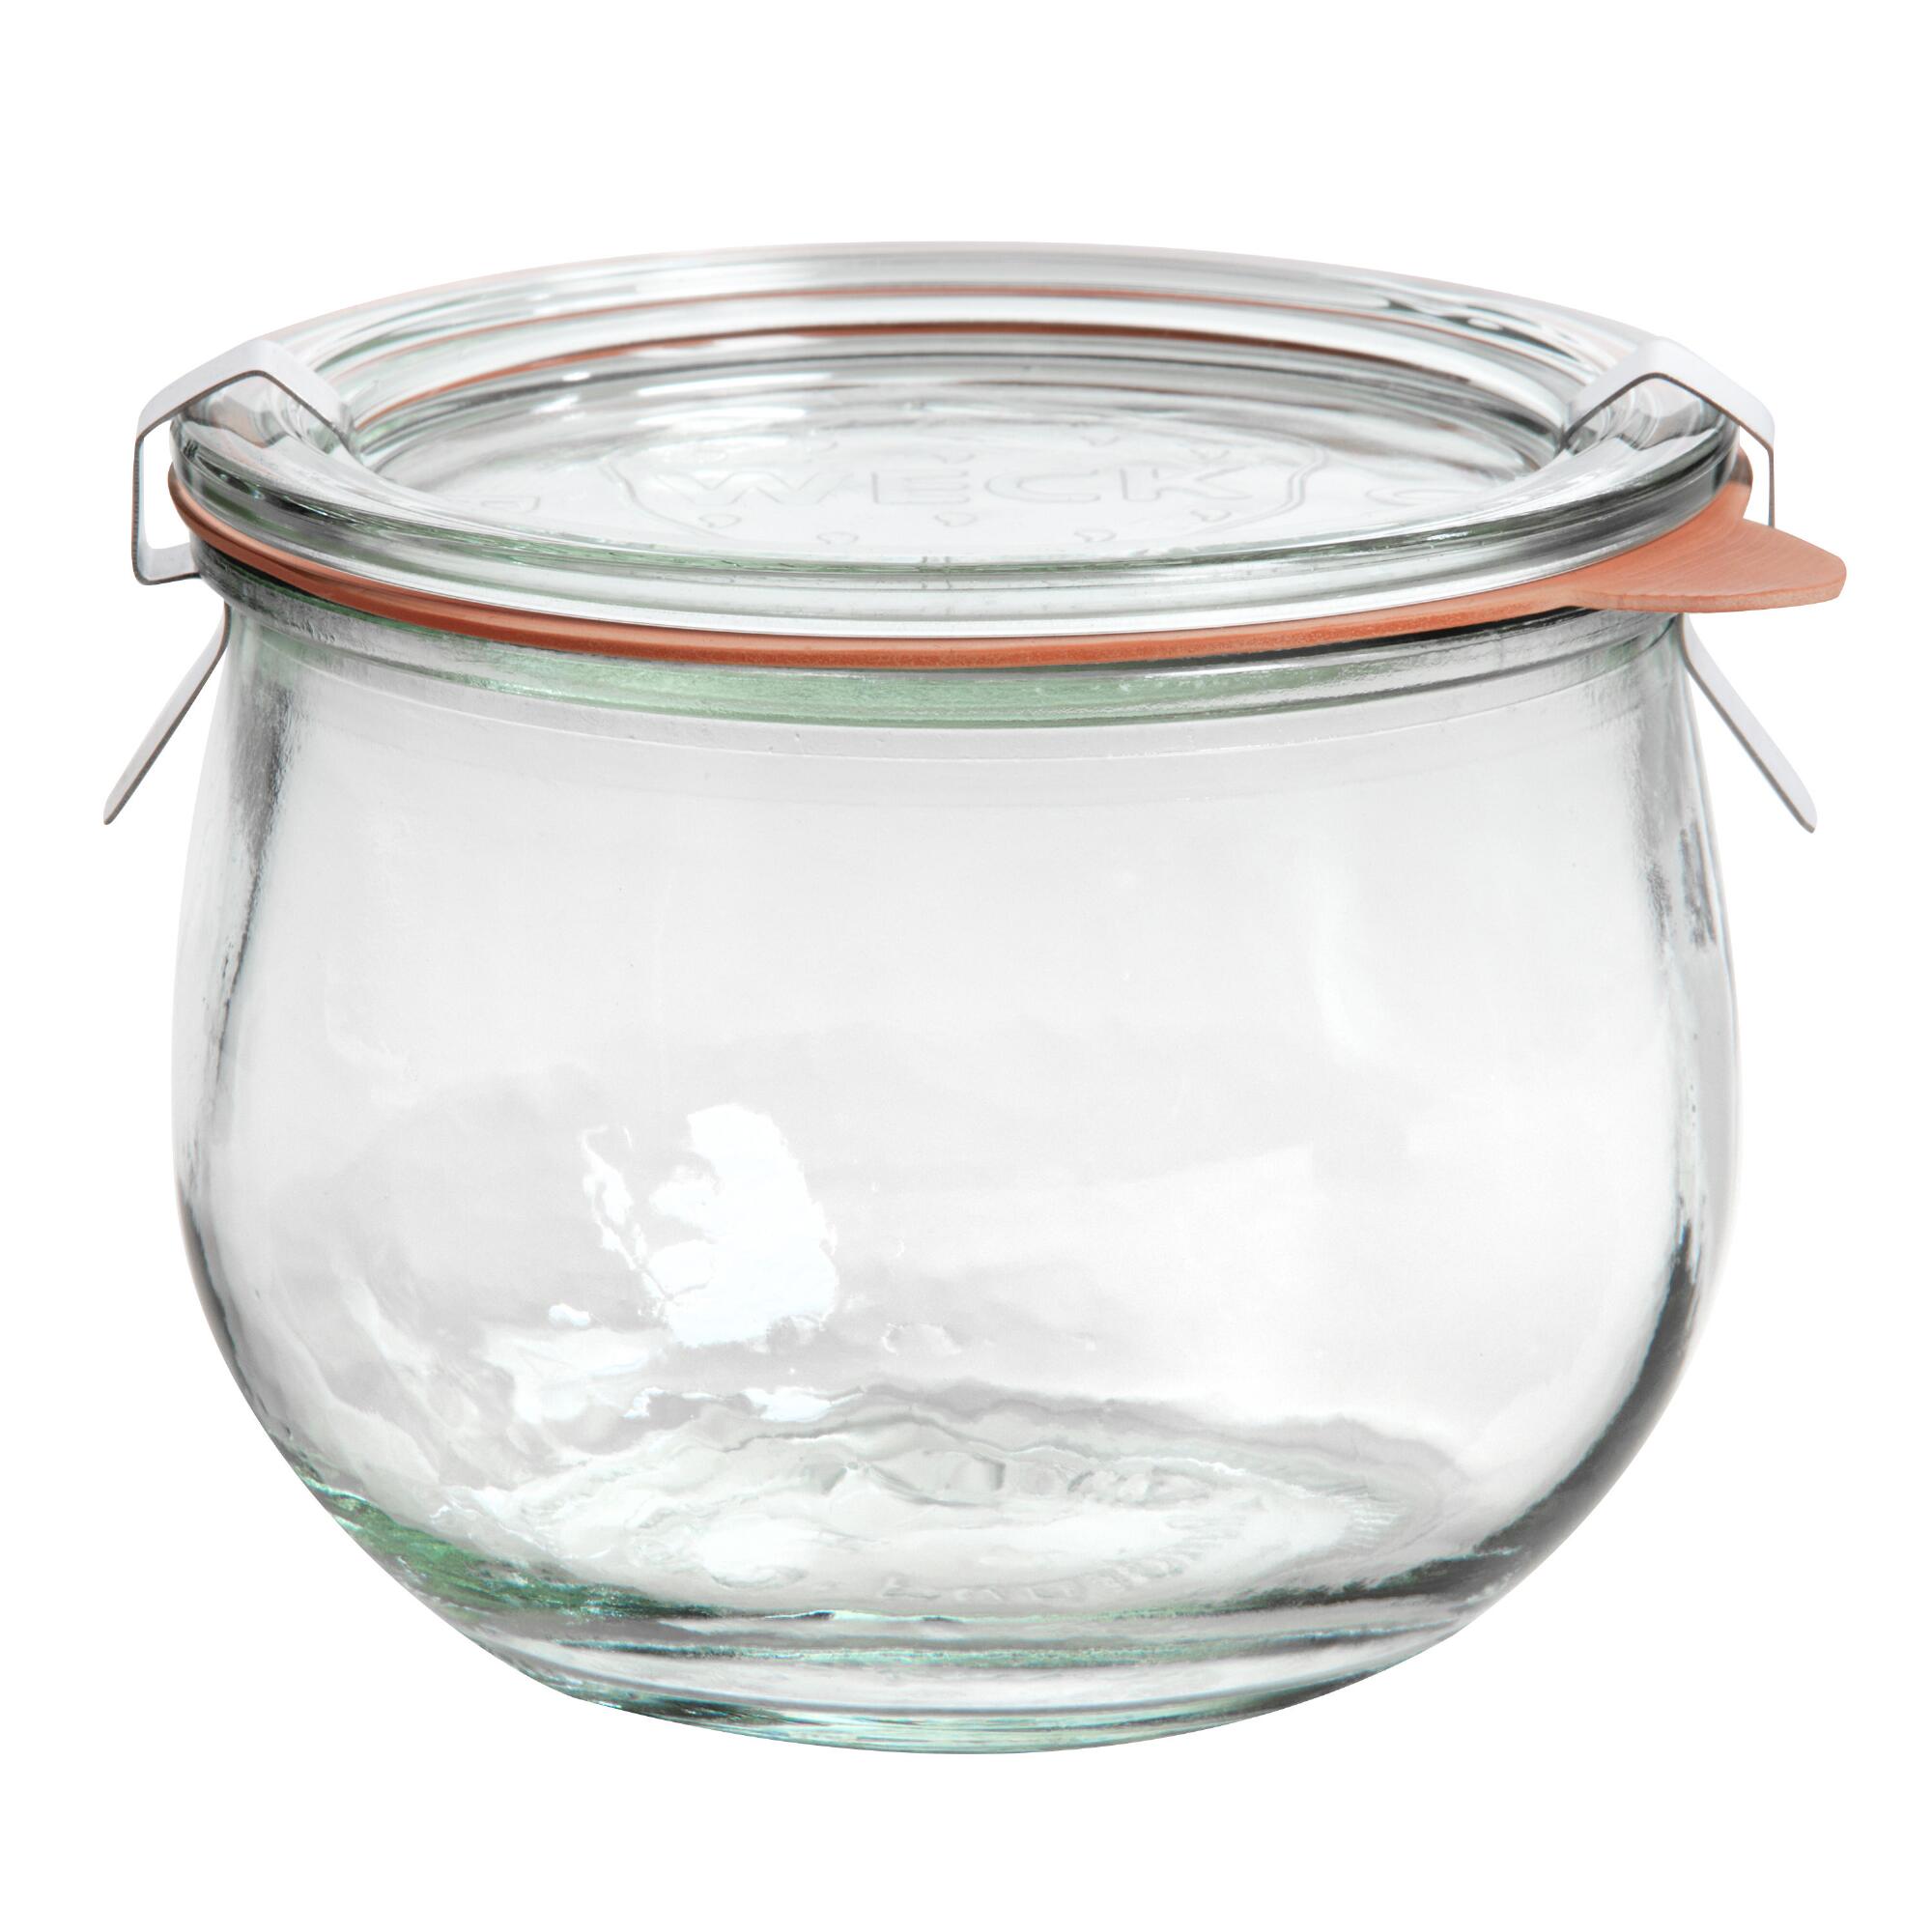 Small Glass Weck Tulip Jar by World Market